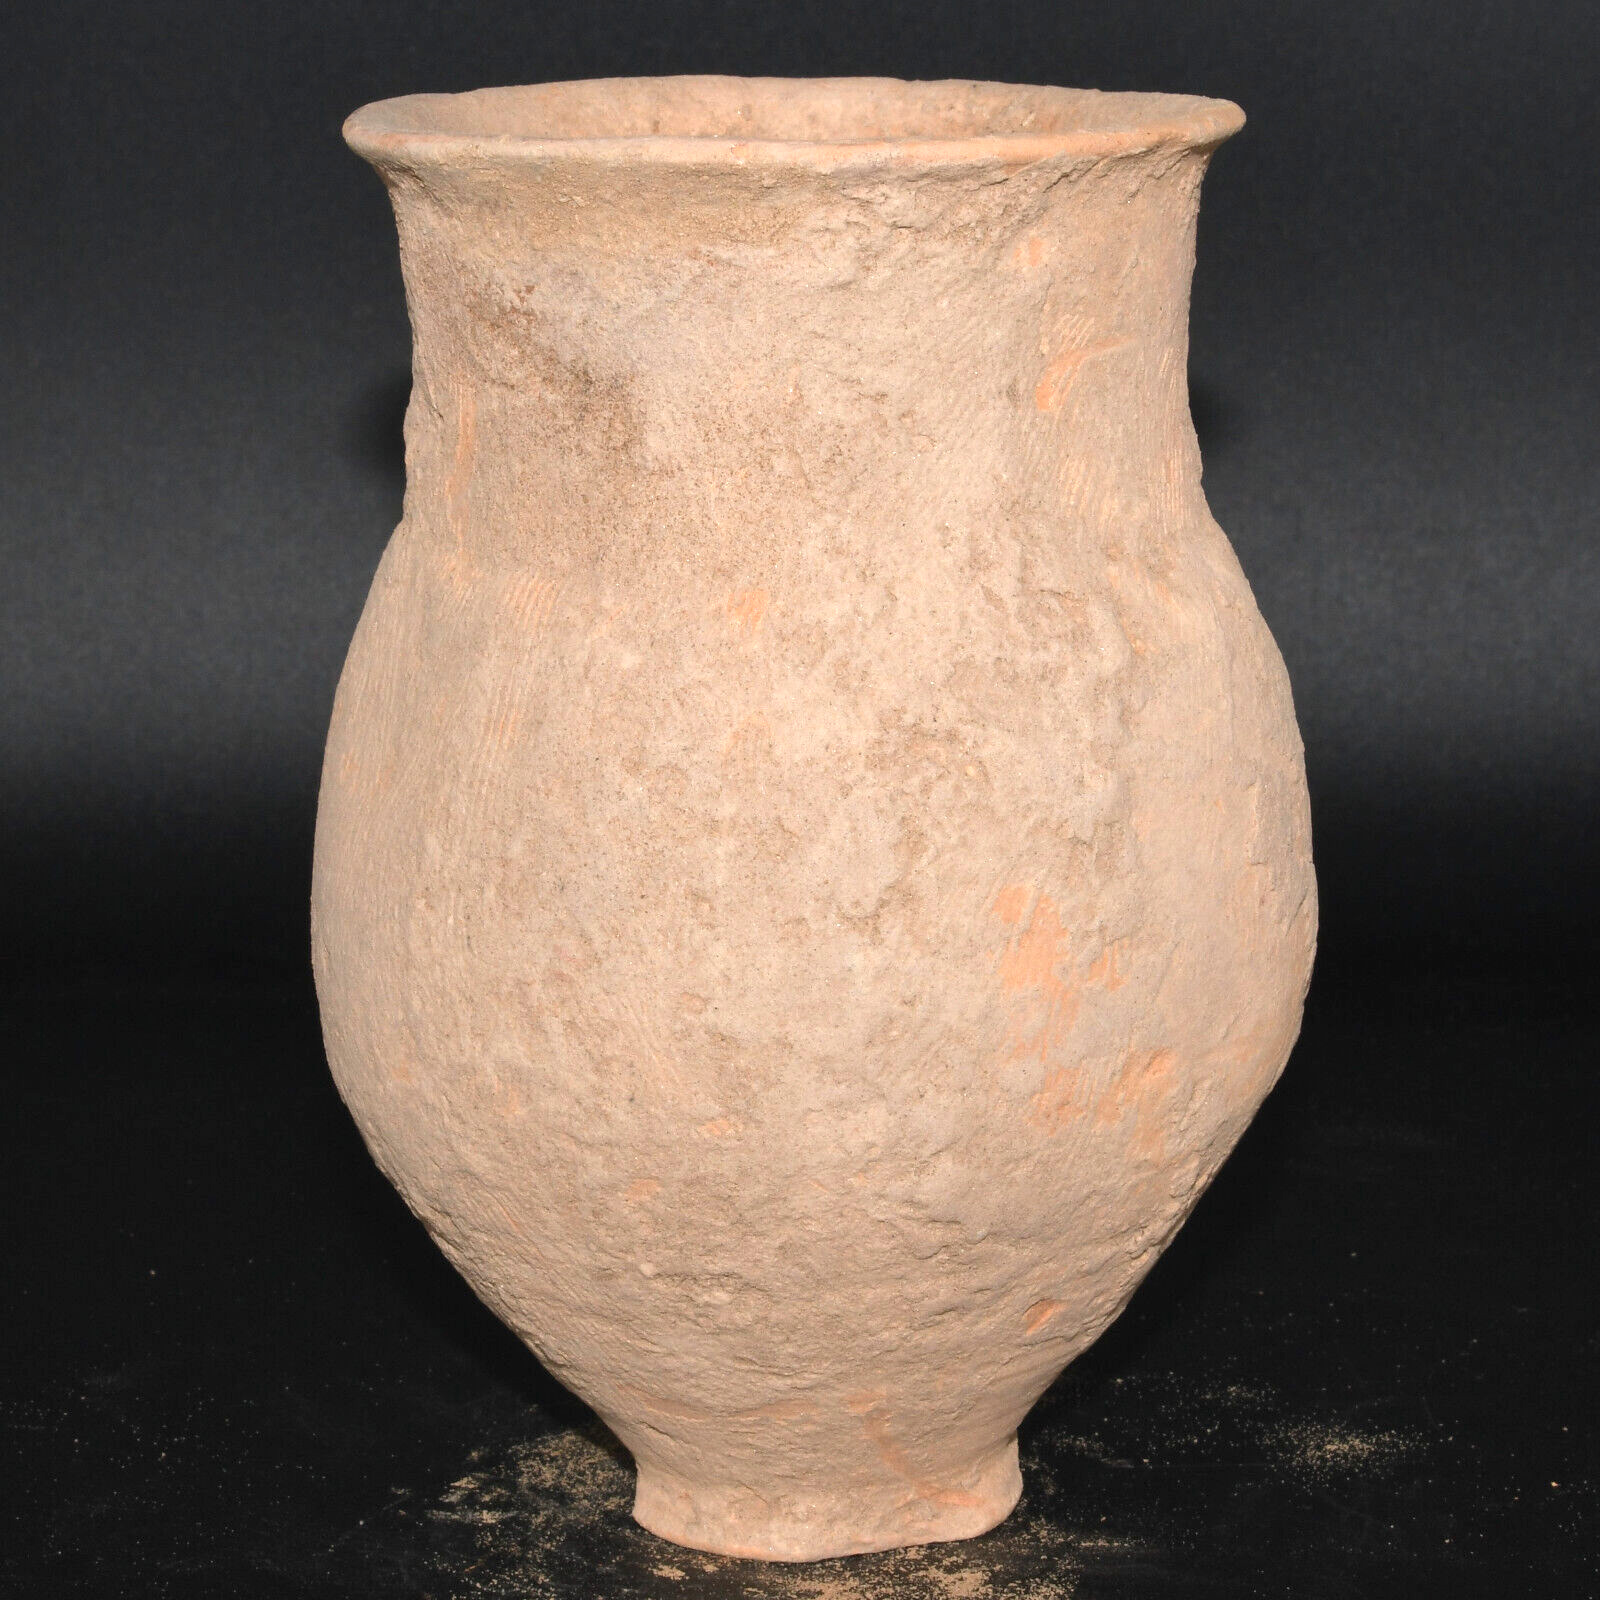 Authentic Ancient Indus Valley Civilization Terracotta Jar Cup Circa 2100 BC